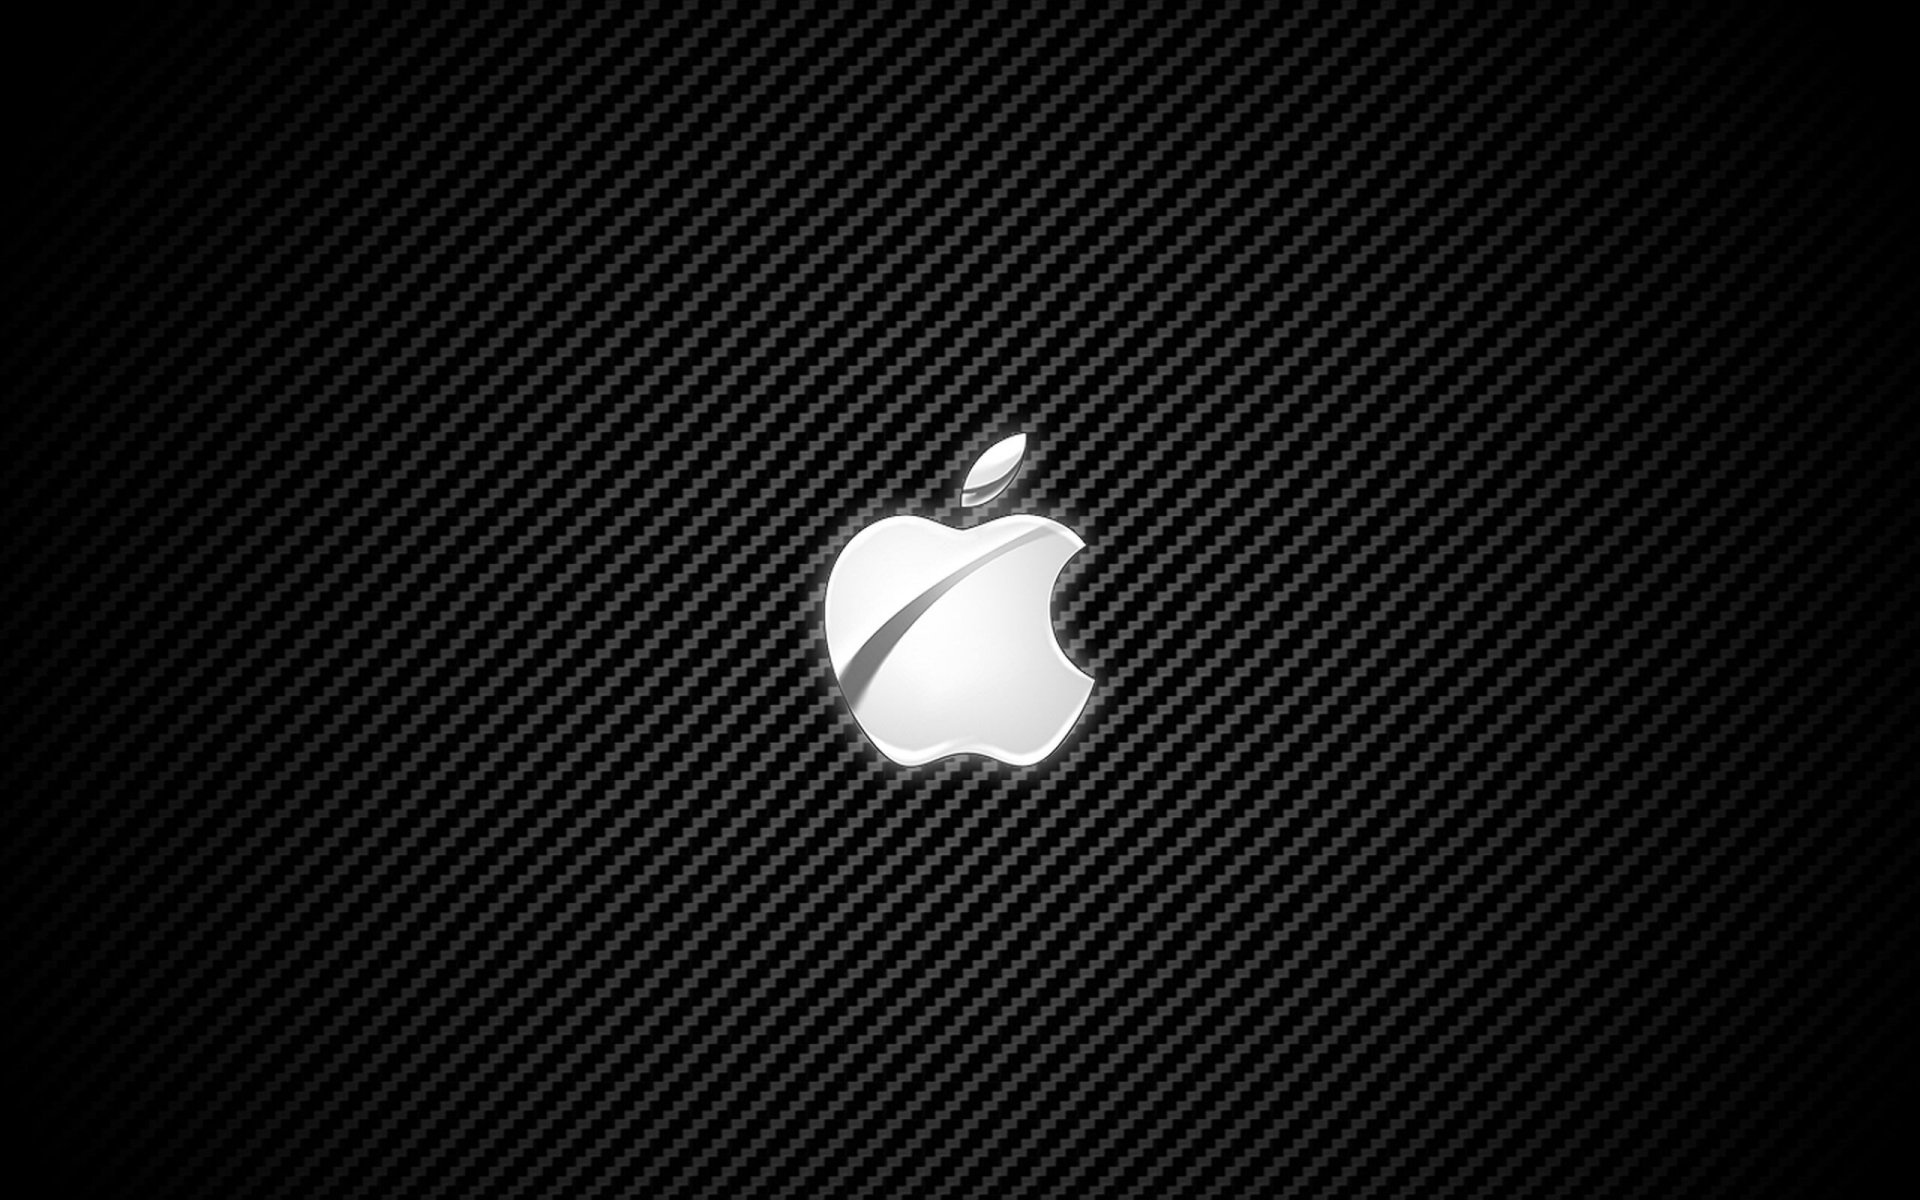 Popular Apple background images